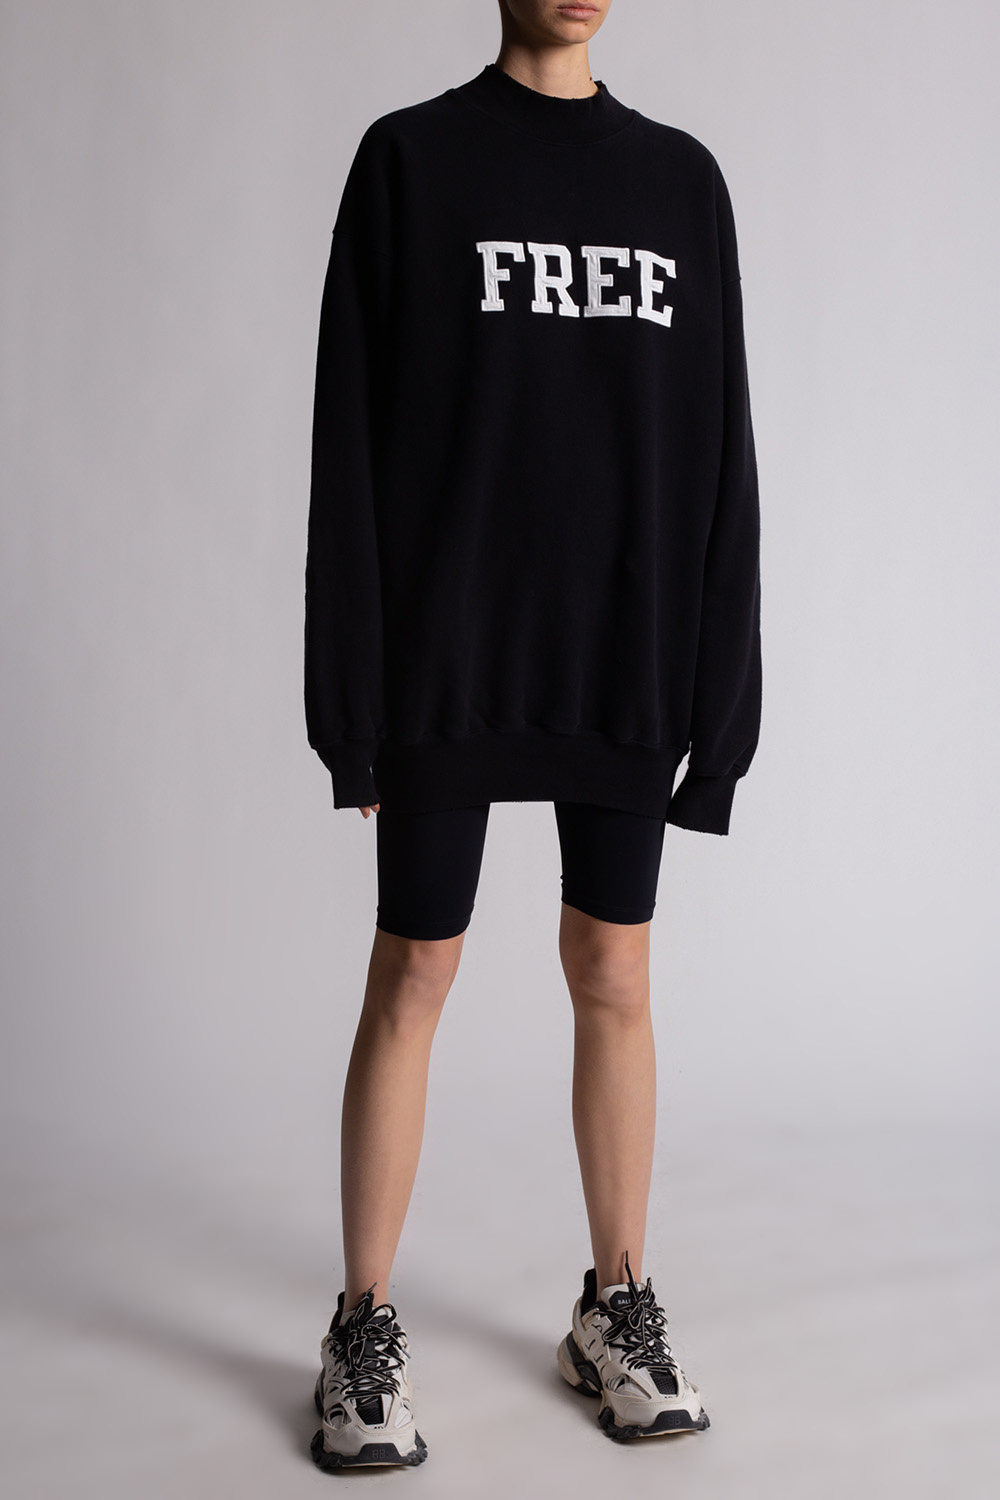 balenciaga free crew-neck sweatshirt